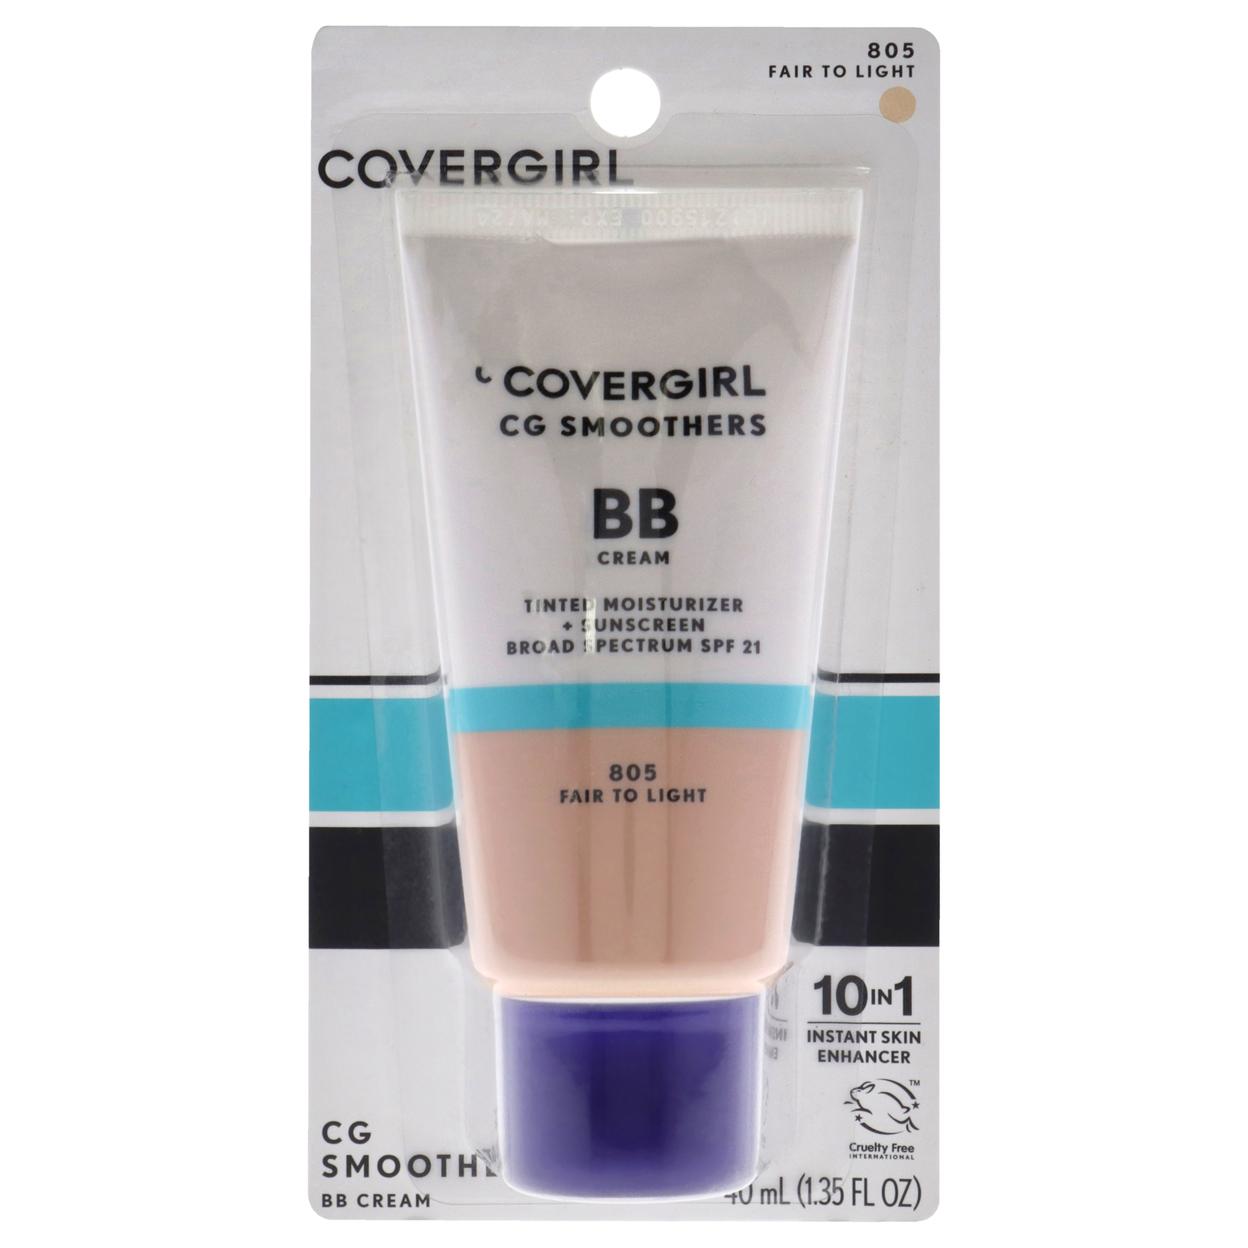 Covergirl CG Smoothers BB Cream Tinted Moisturizer Plus Sunscreen SPF 21 - 805 Fair To Light Makeup 1.35 Oz